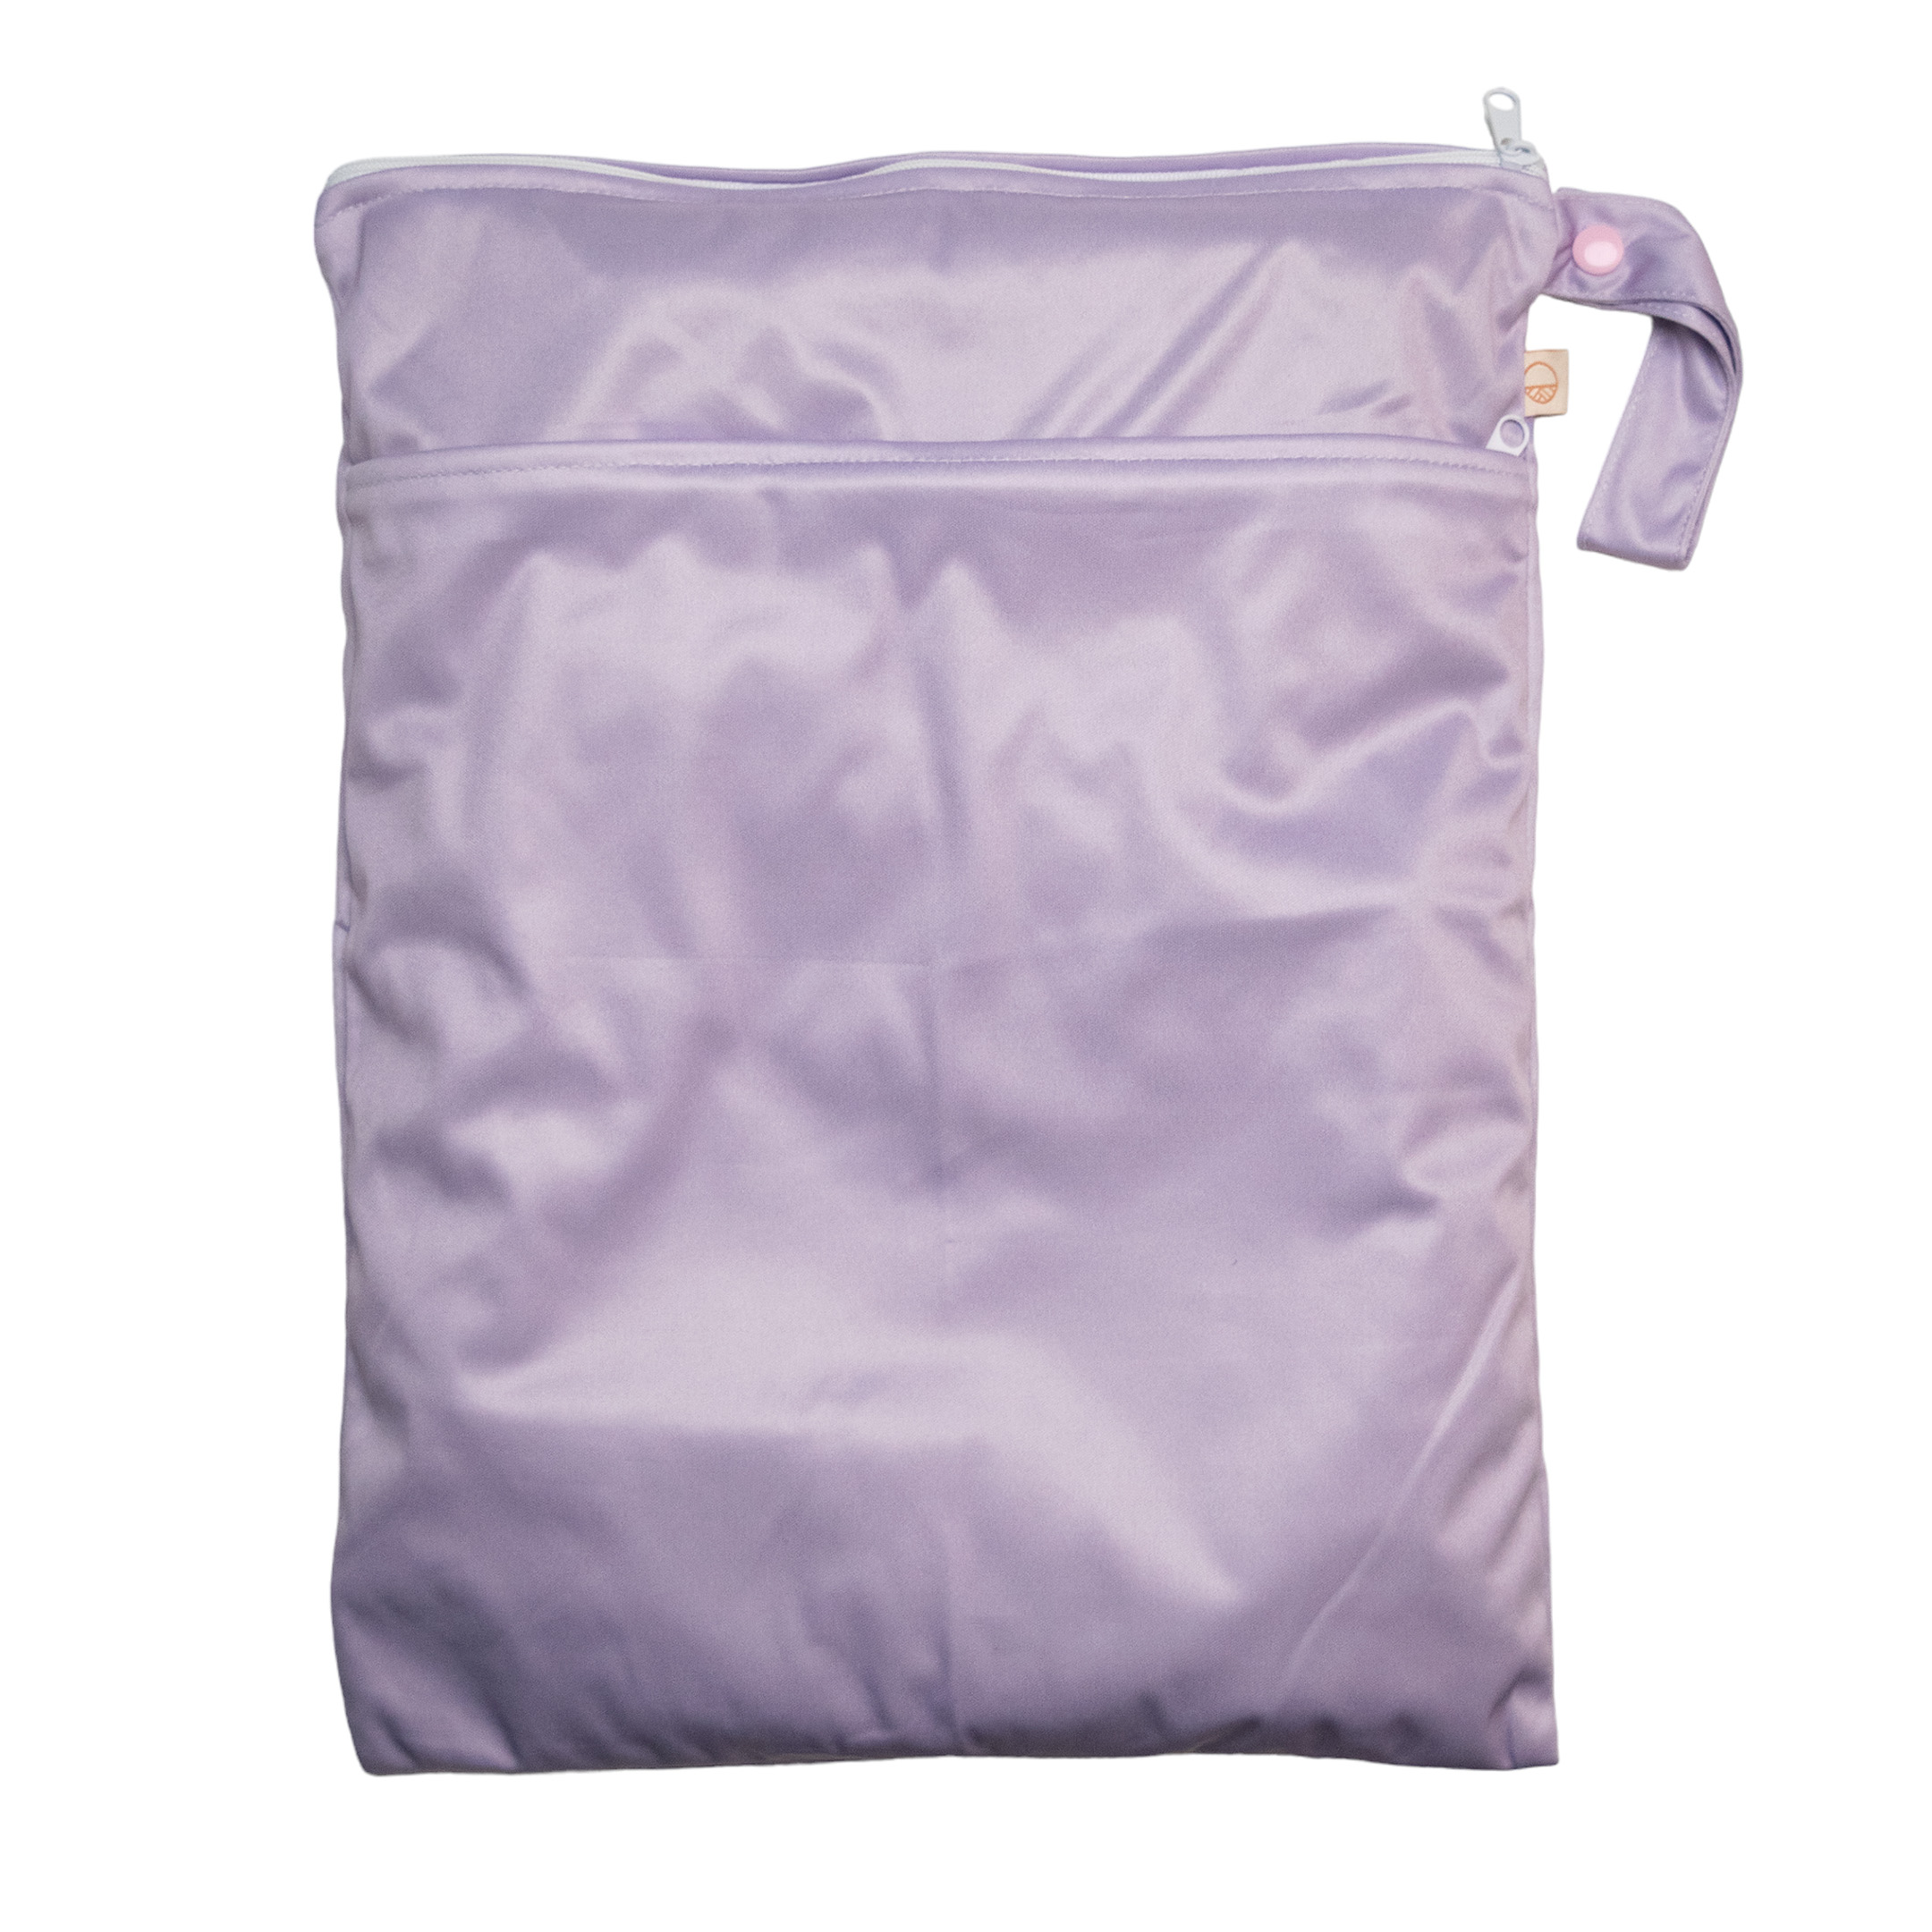 Nestling Double Pocket Wet Bag - Katherine Quinn Collection